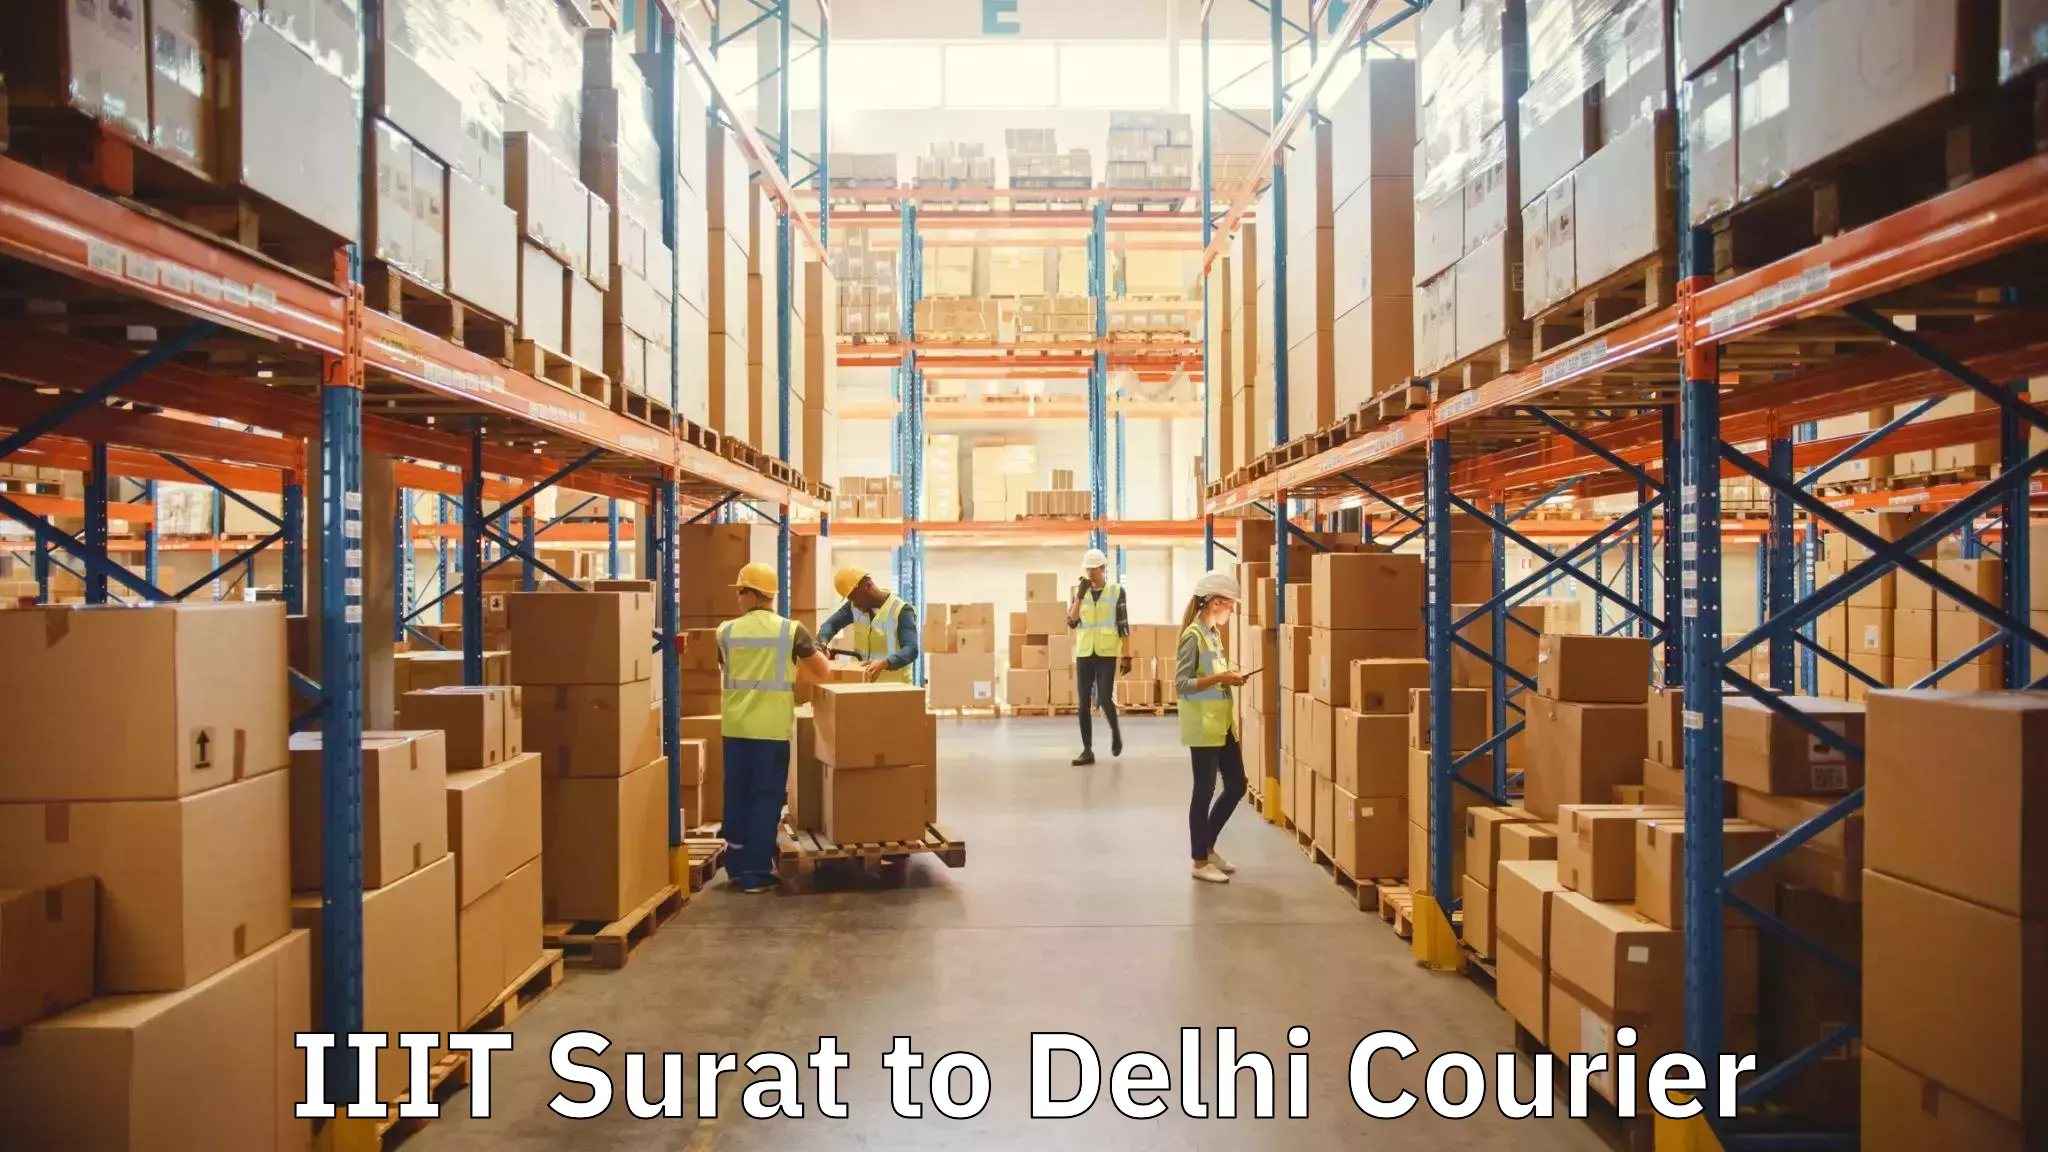 Expert moving and storage IIIT Surat to Delhi